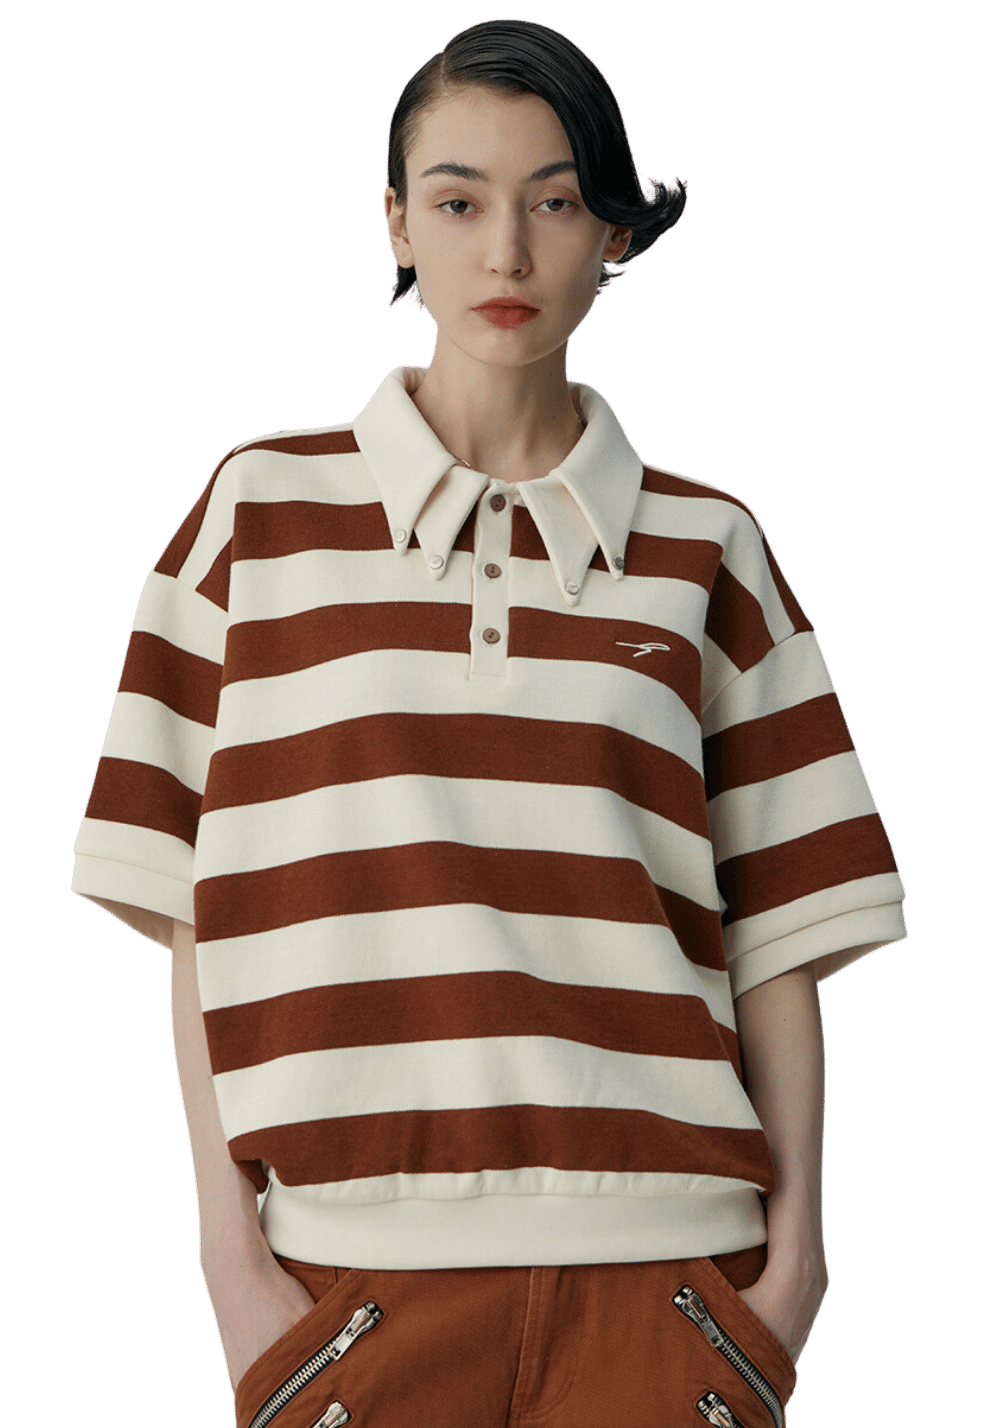 Striped Polo Shirt - PSYLOS 1, Striped Polo Shirt, Shirt, The Last Redemption, PSYLOS 1